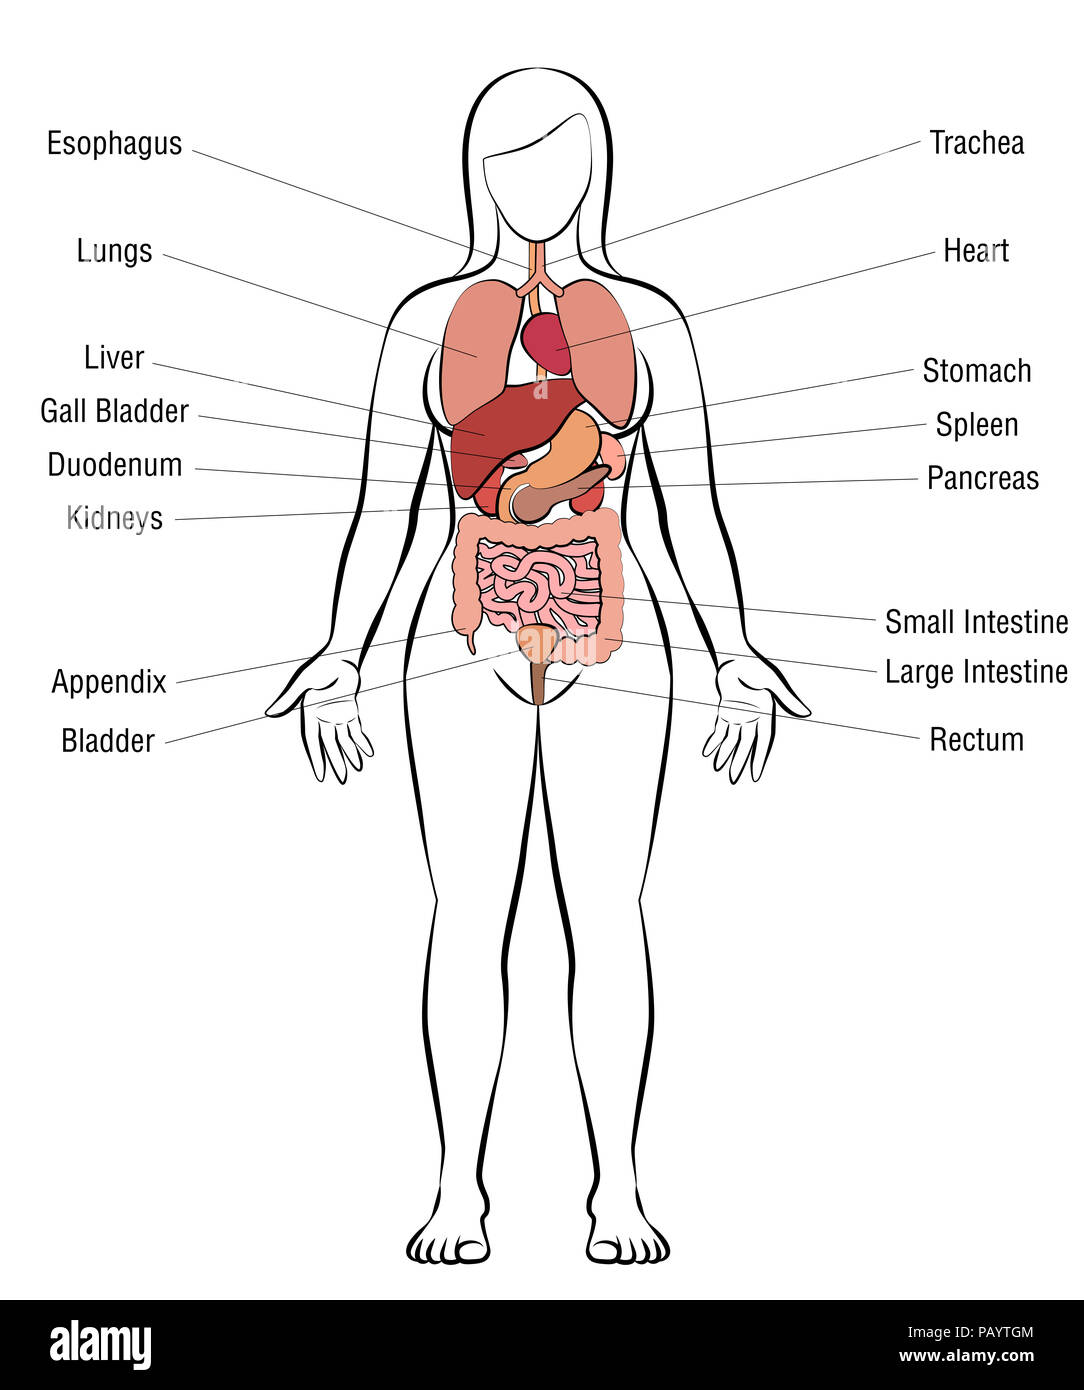 Internal organs, female body - schematic human anatomy illustration - on white background. Stock Photo